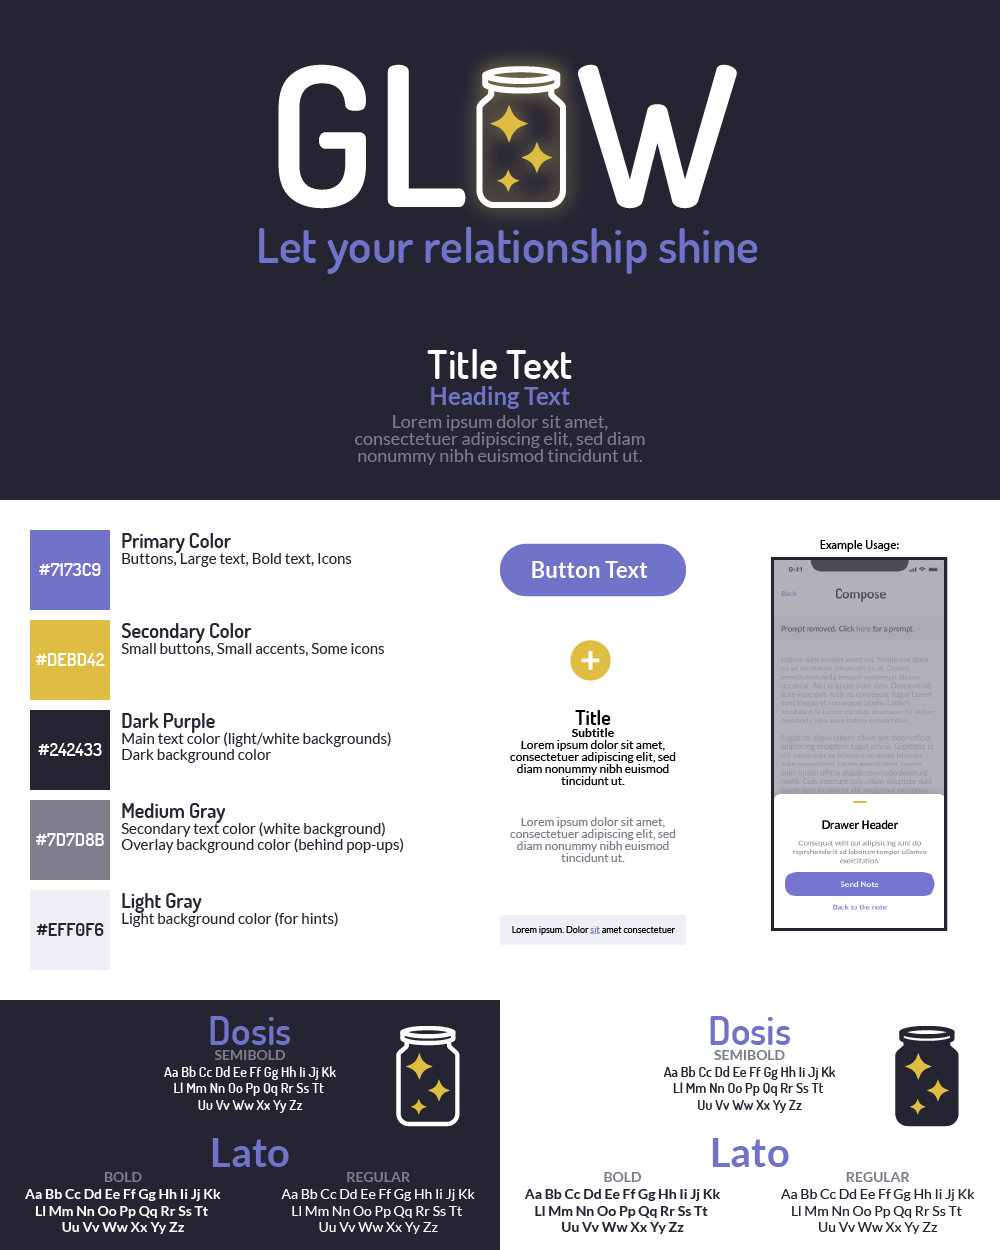 Branding guide for Glow